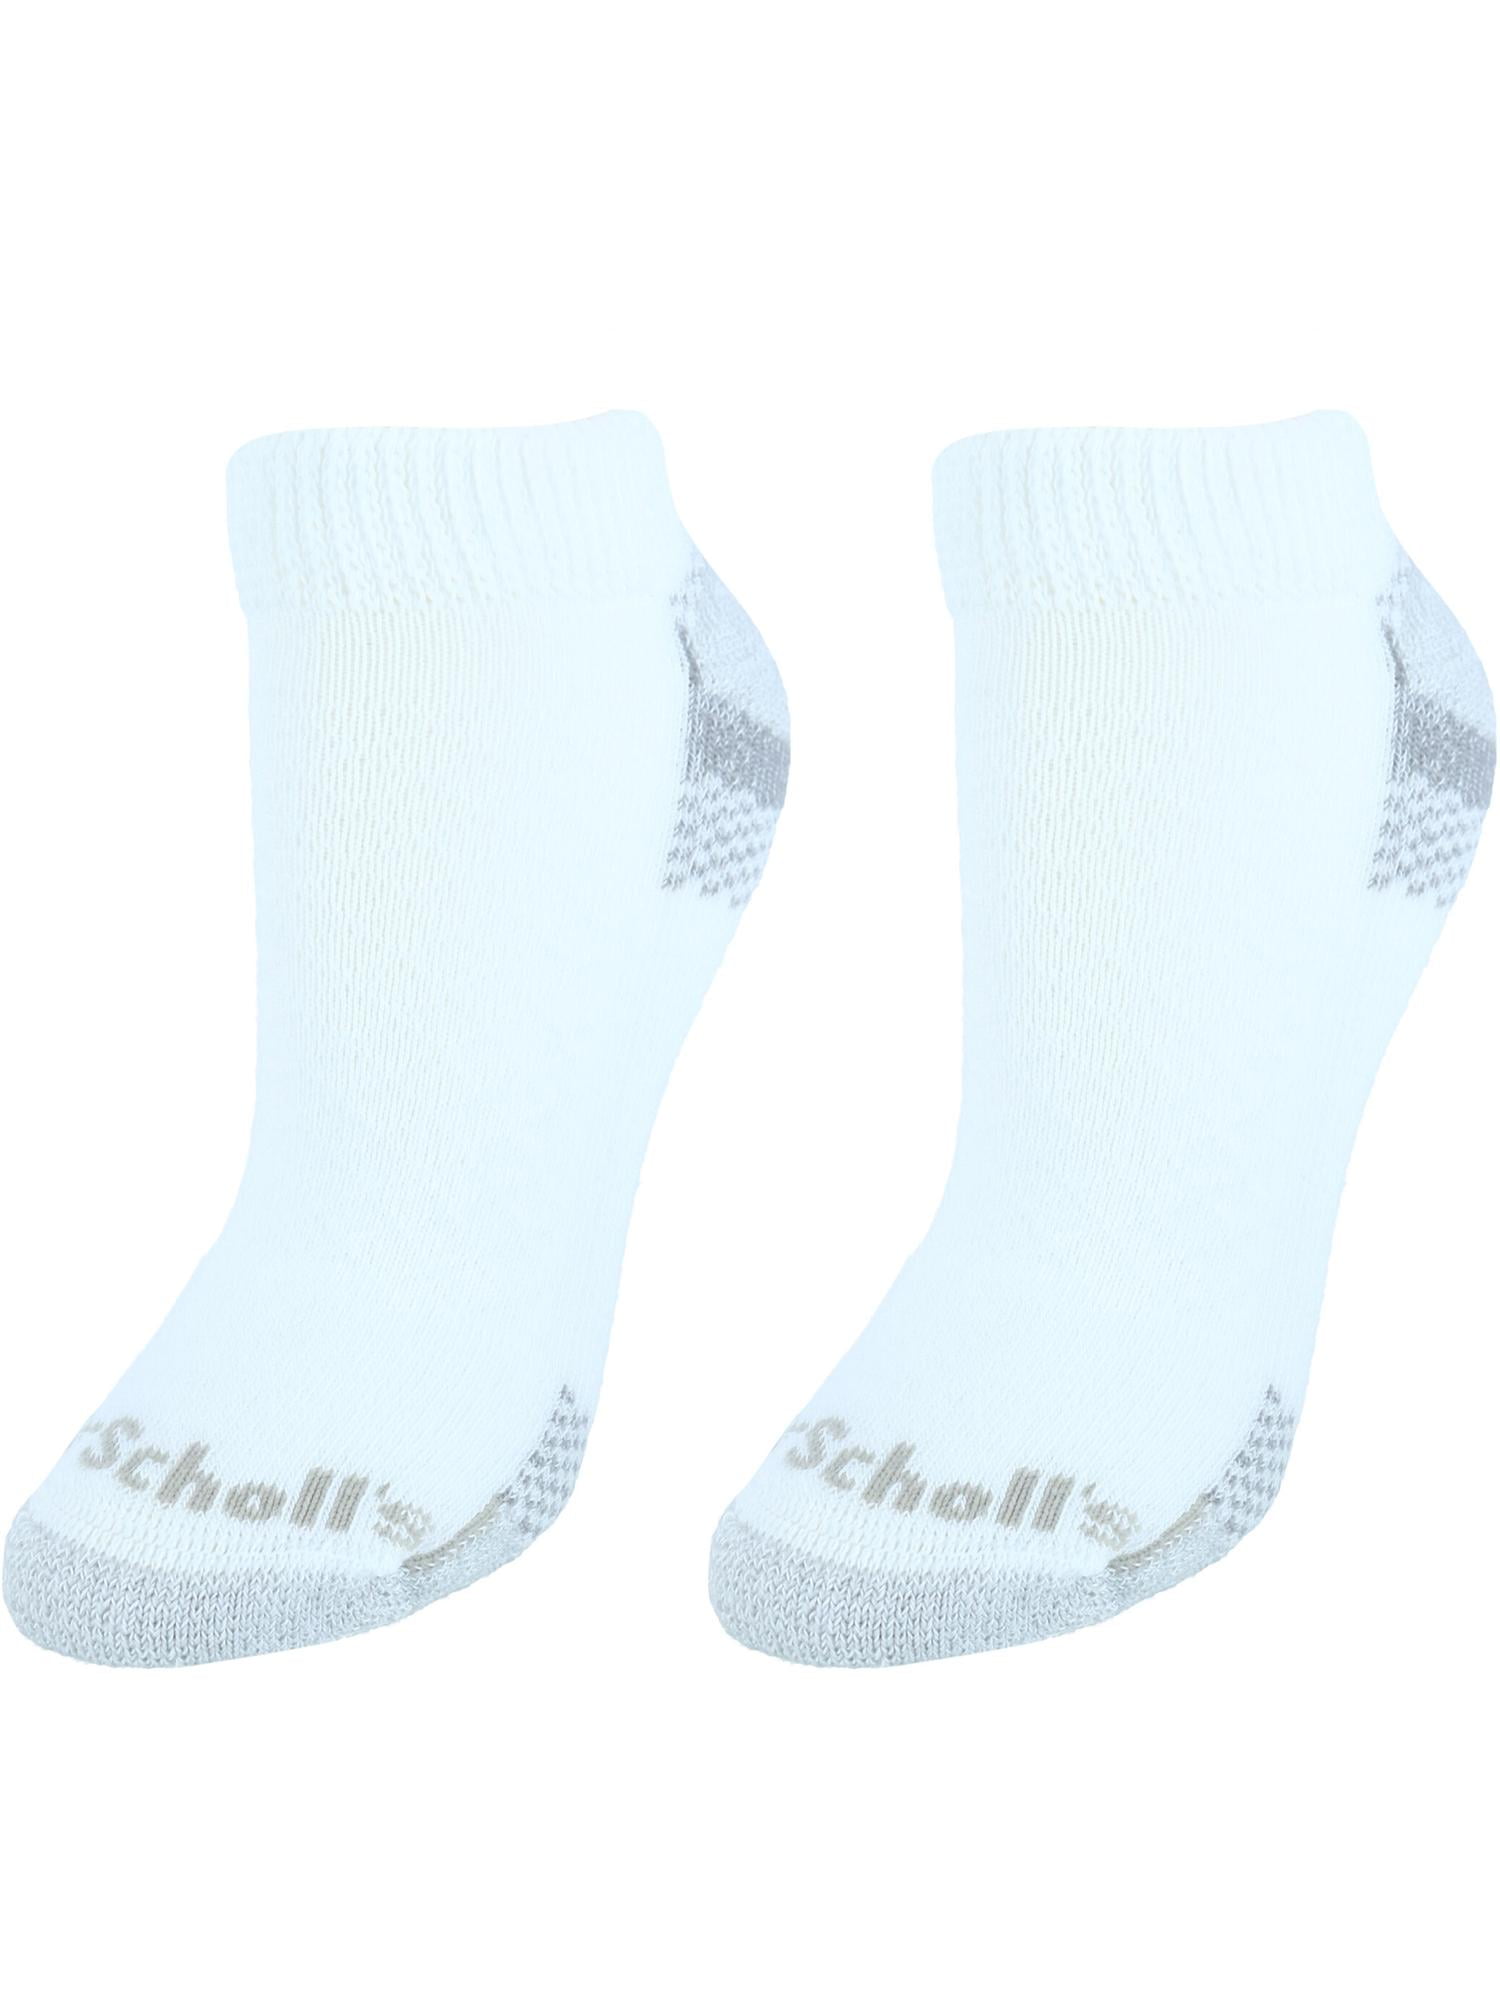 Dr Scholls ' Low Cut Advanced Relief Socks (2 Pair Pack) (Women) -  Walmart.com